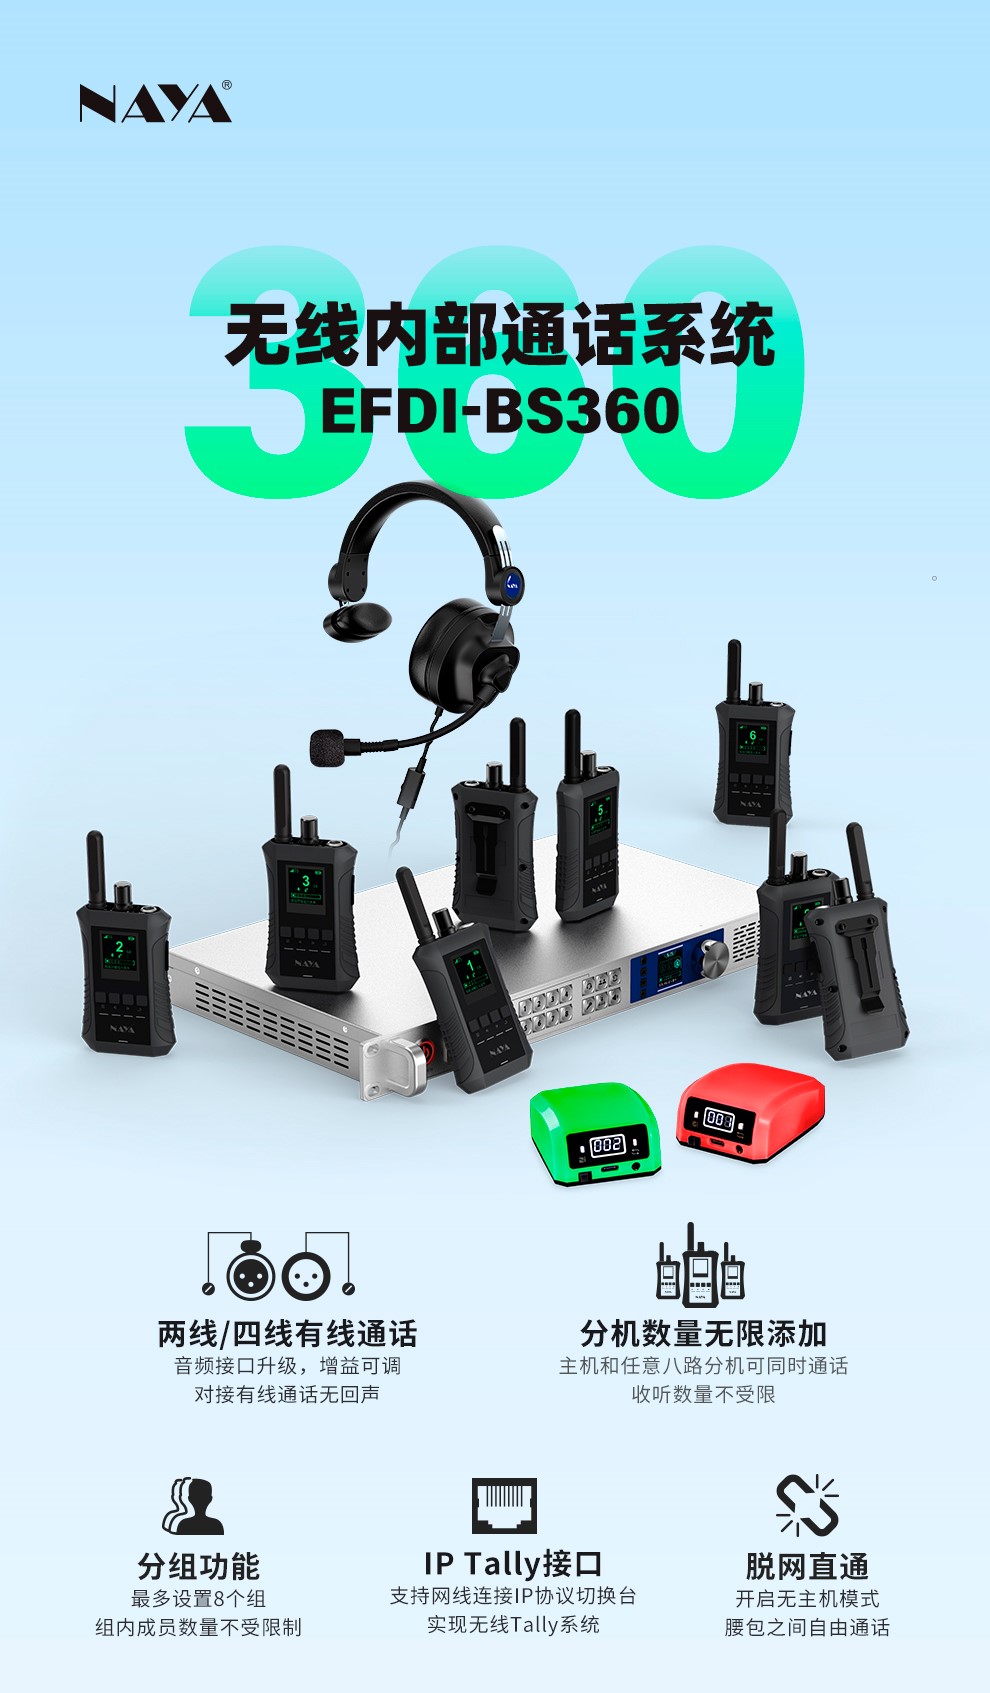 EFDI-BS360系列无线内部通话系统是NAYA无线内部通话系统的中高端产品系列，适用于融媒体中心、小型转播车、小型演播室、小剧场、礼堂以及EFP电子现场制作，更先进的技术带来了音质、音量和延迟性能的全面提升。